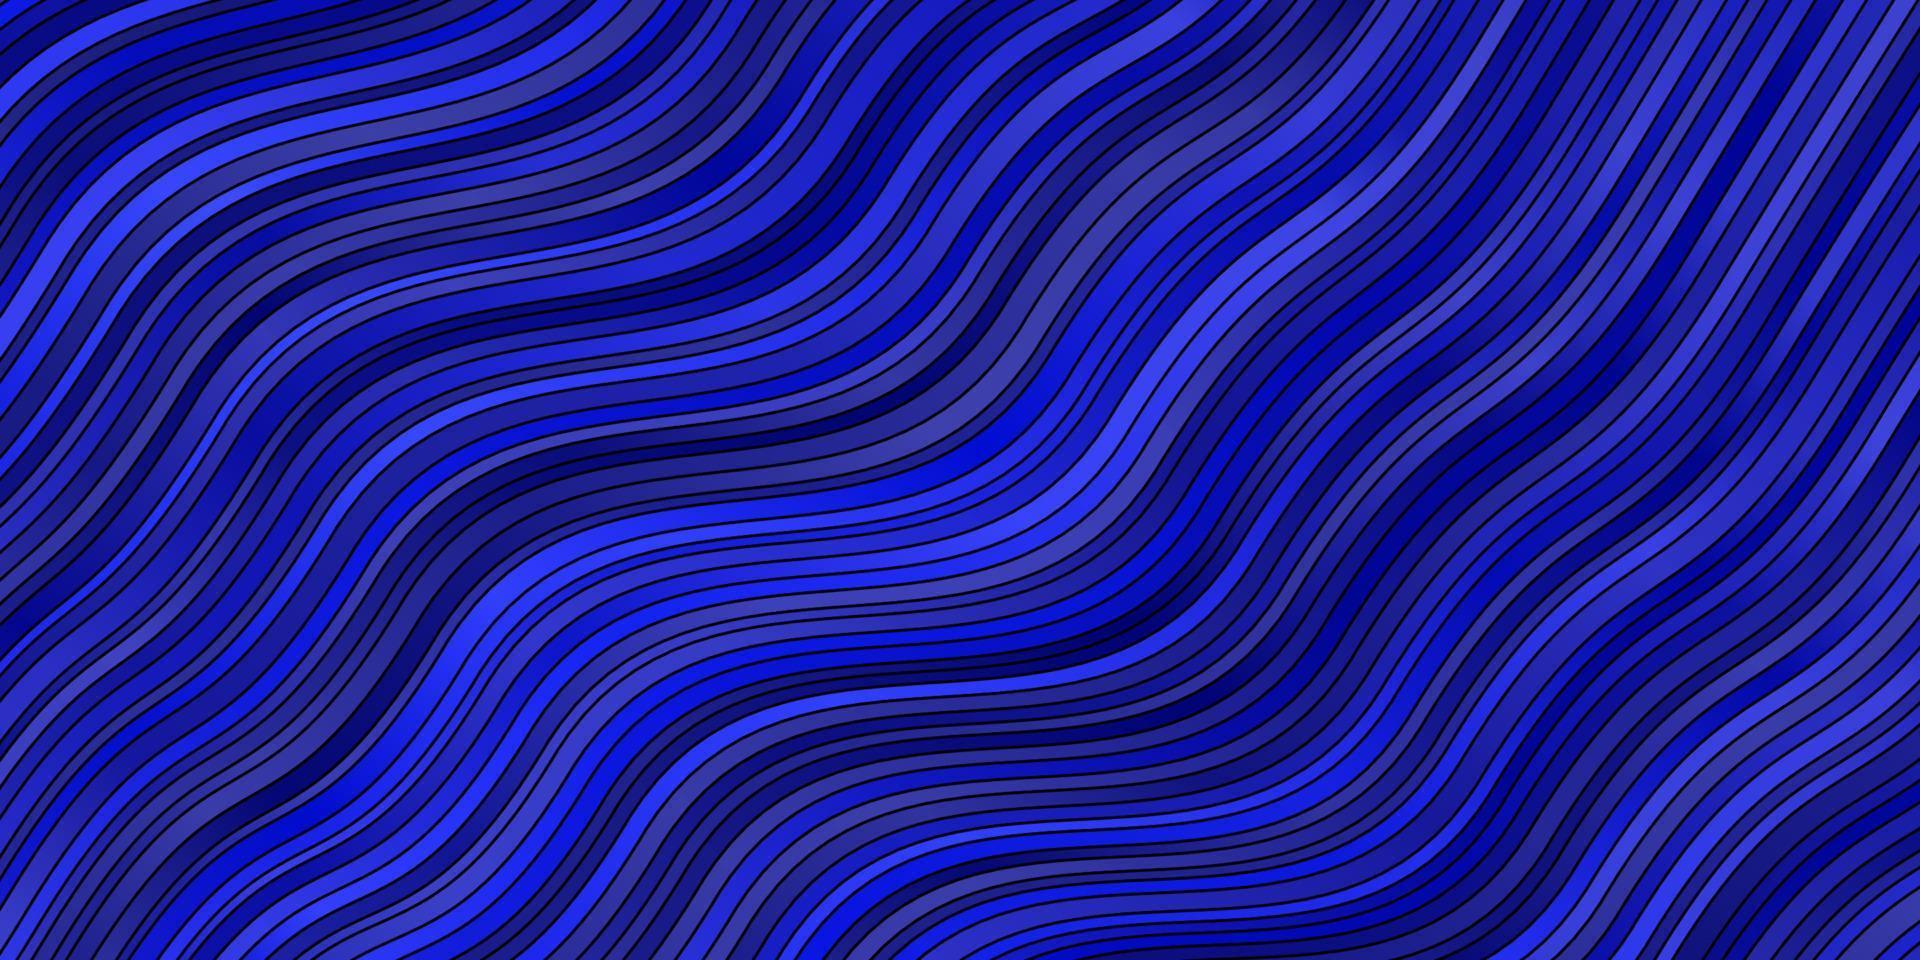 Dark BLUE vector texture with curves.